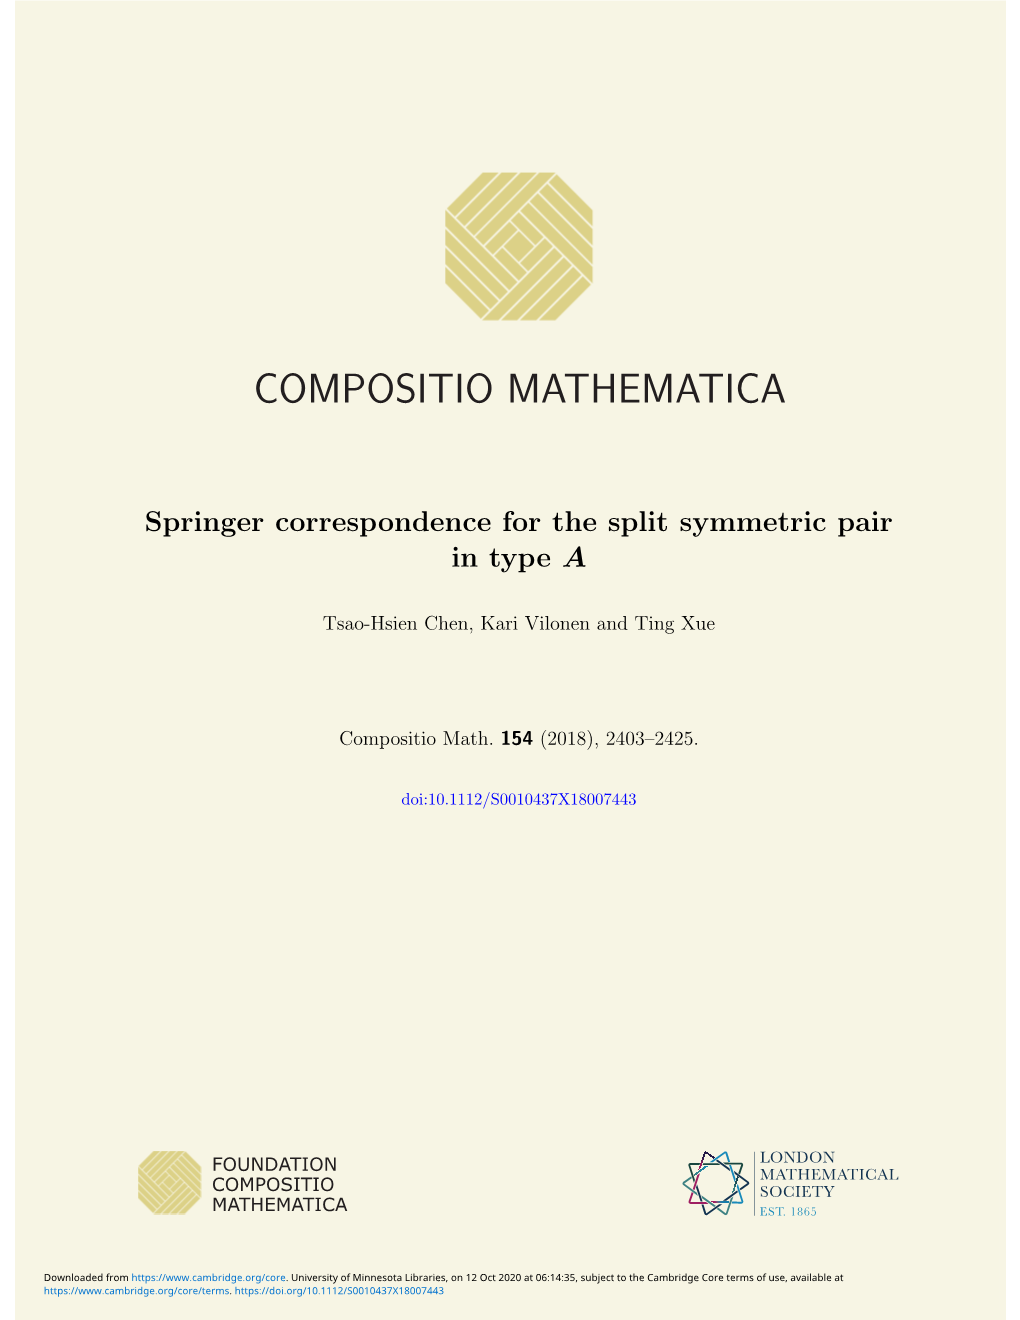 Springer Correspondence for the Split Symmetric Pair in Type A